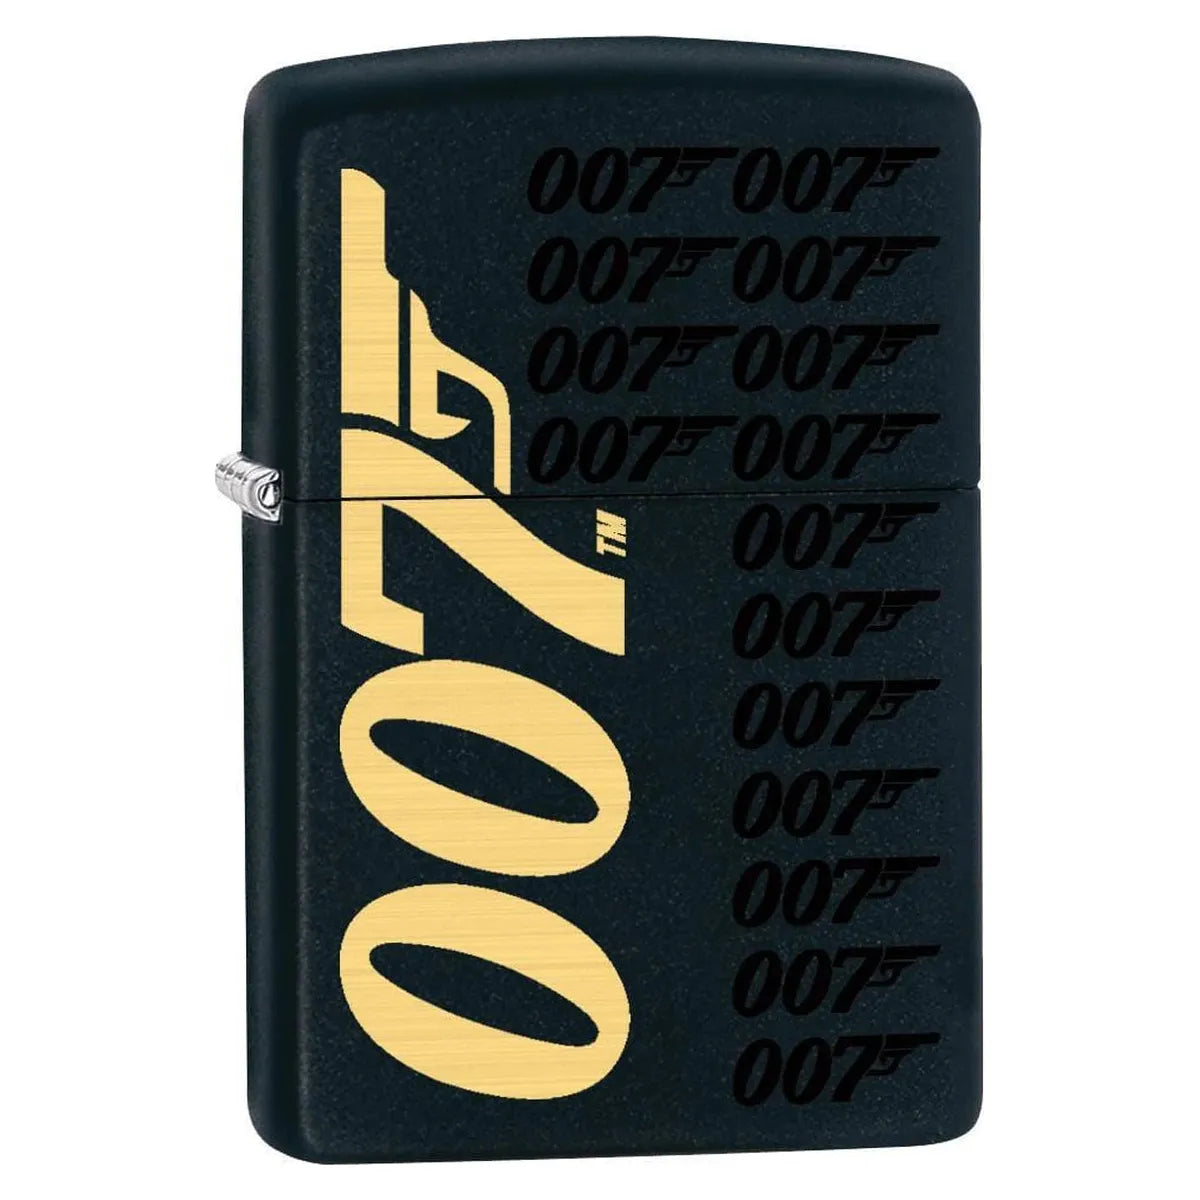 James Bond 007 Logos - Black Matte 78873